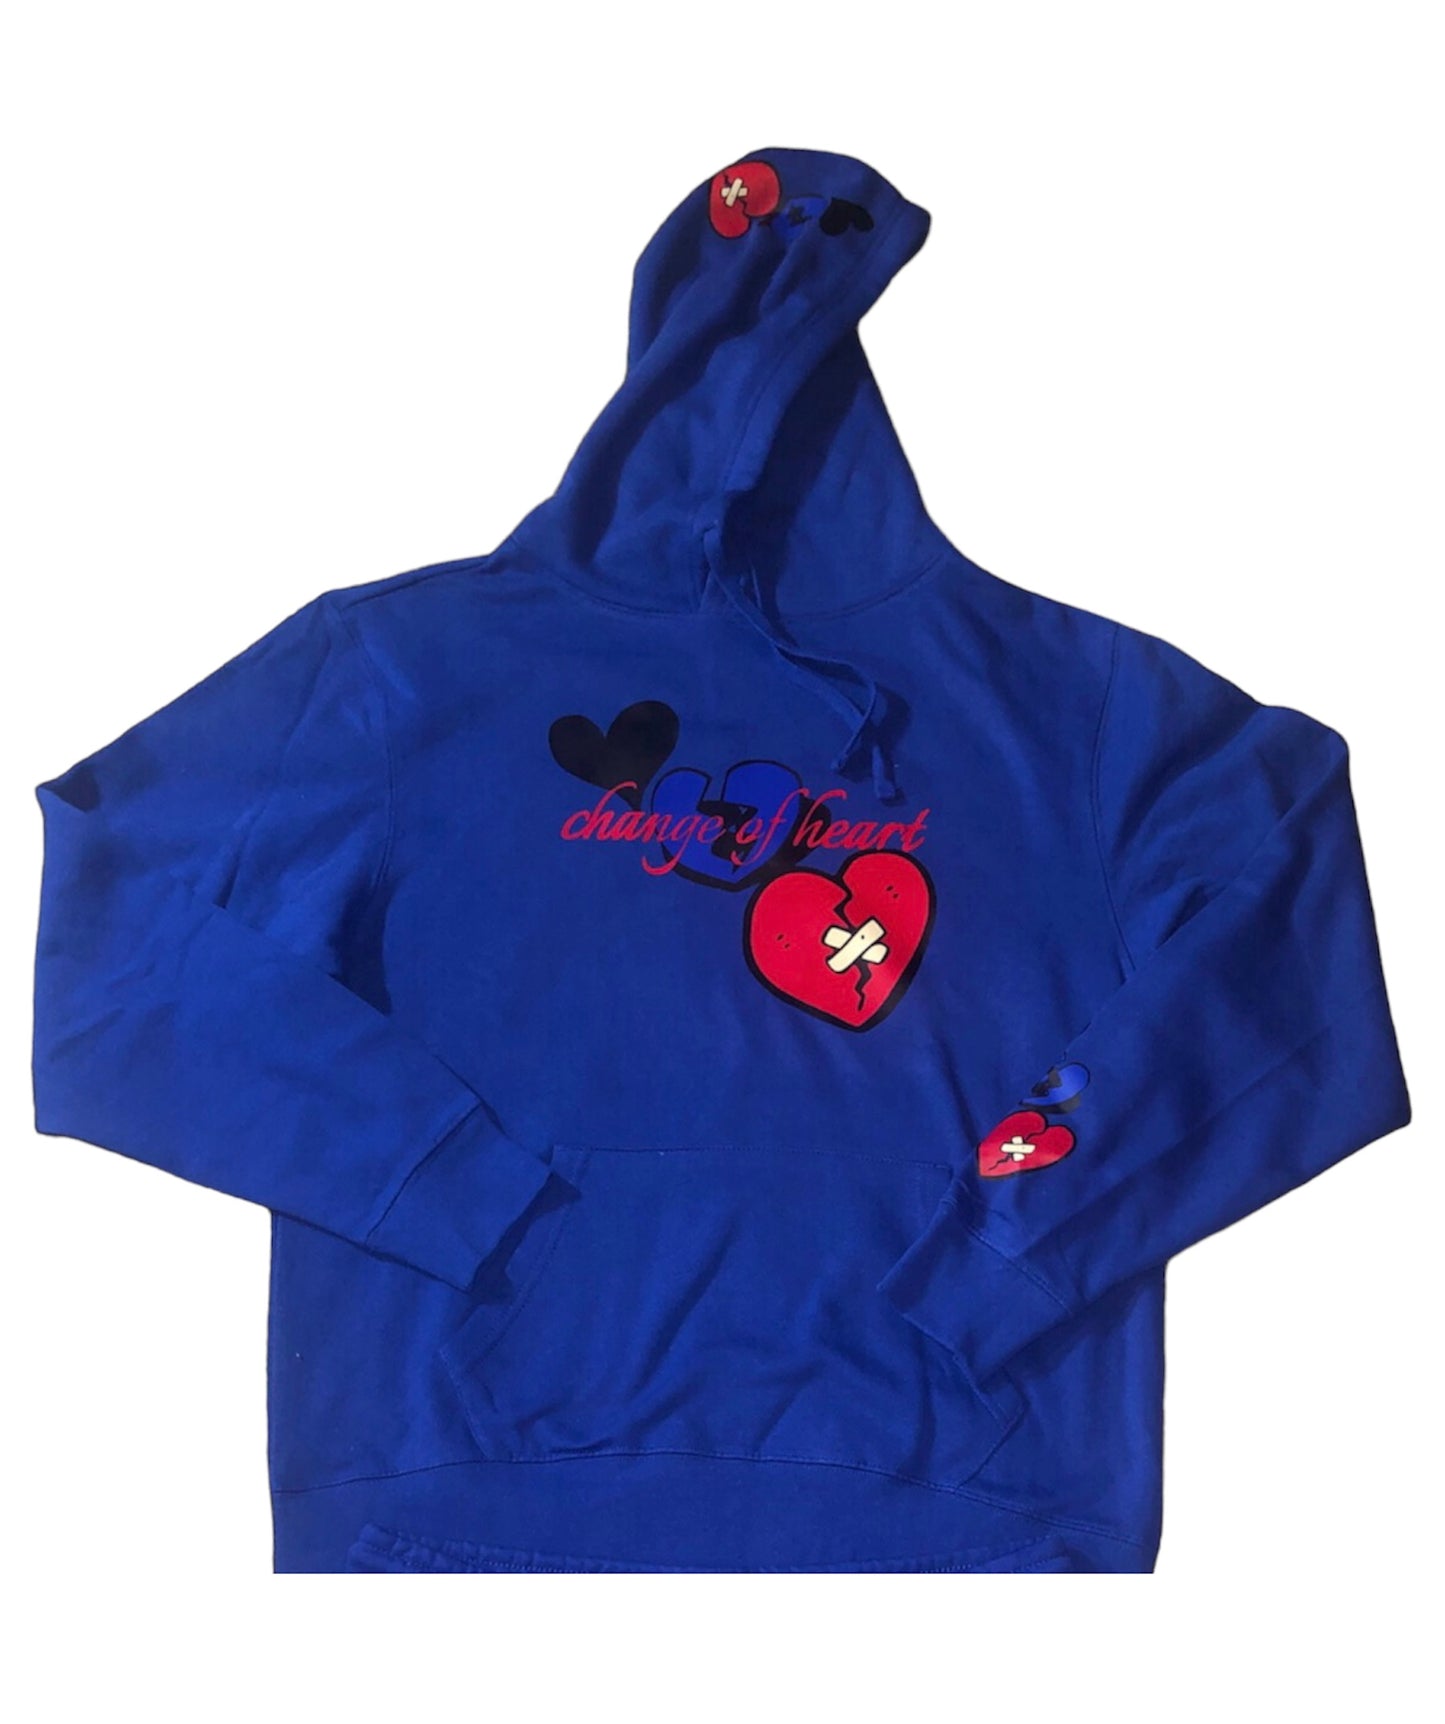 Change of Heart hoodies